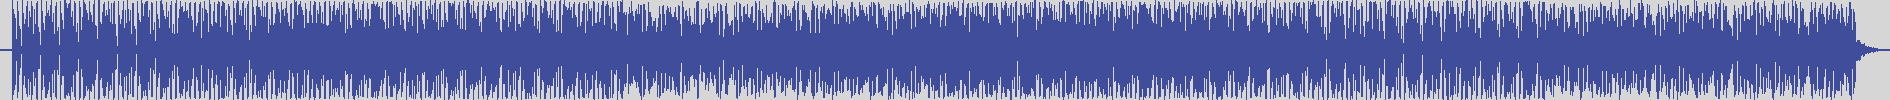 nf_boyz_records [NFY065] Adjacent Six - Best App [Soulrain's House Mix] audio wave form